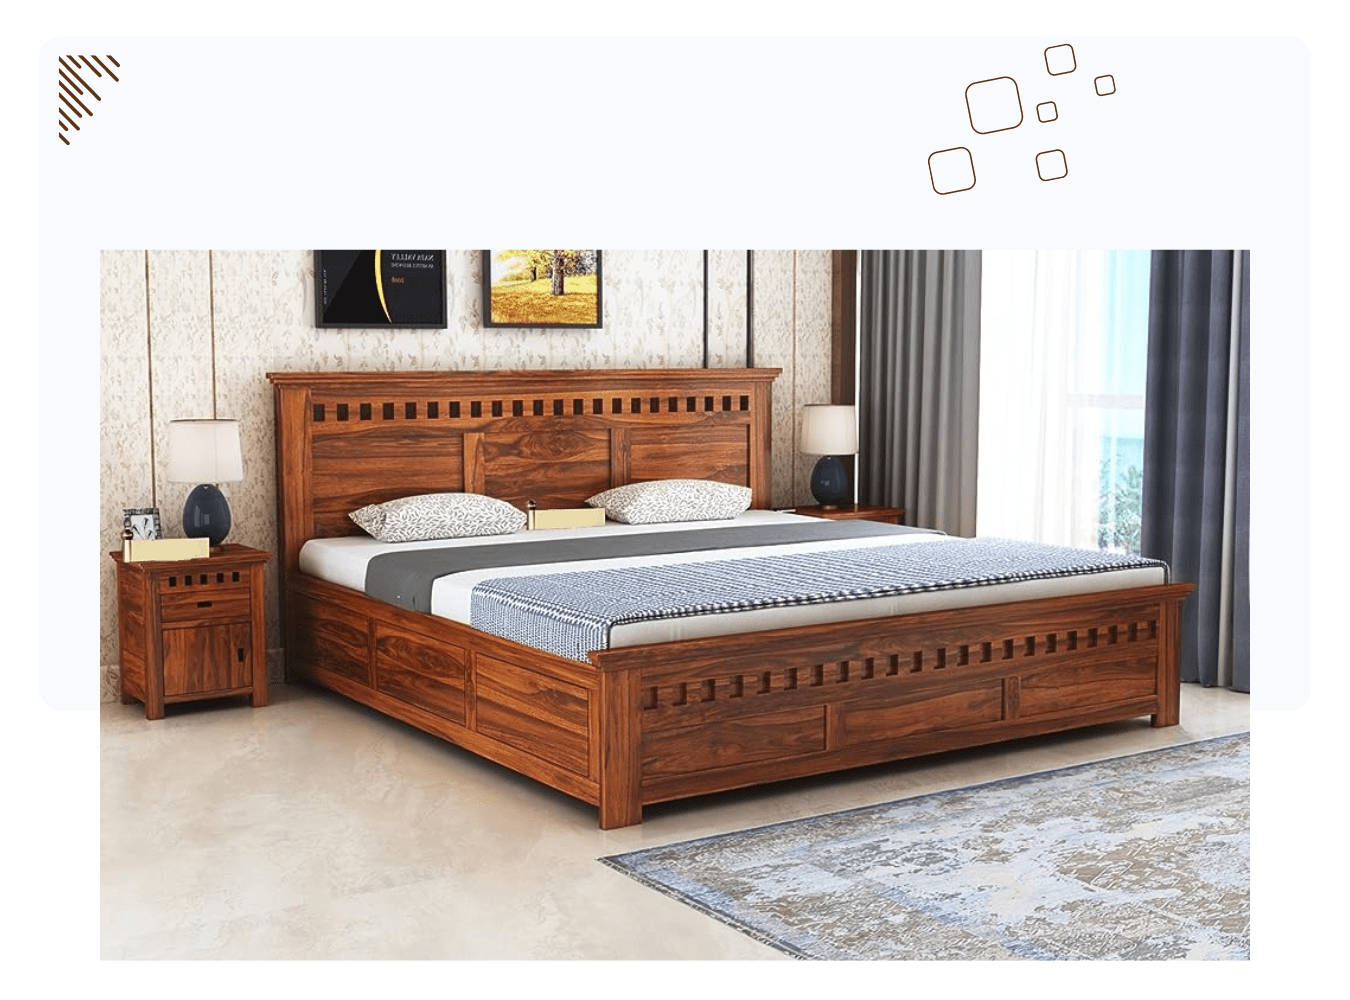 Urbanteakfurnandinterior - Furniture Page - Wooden Bed 1